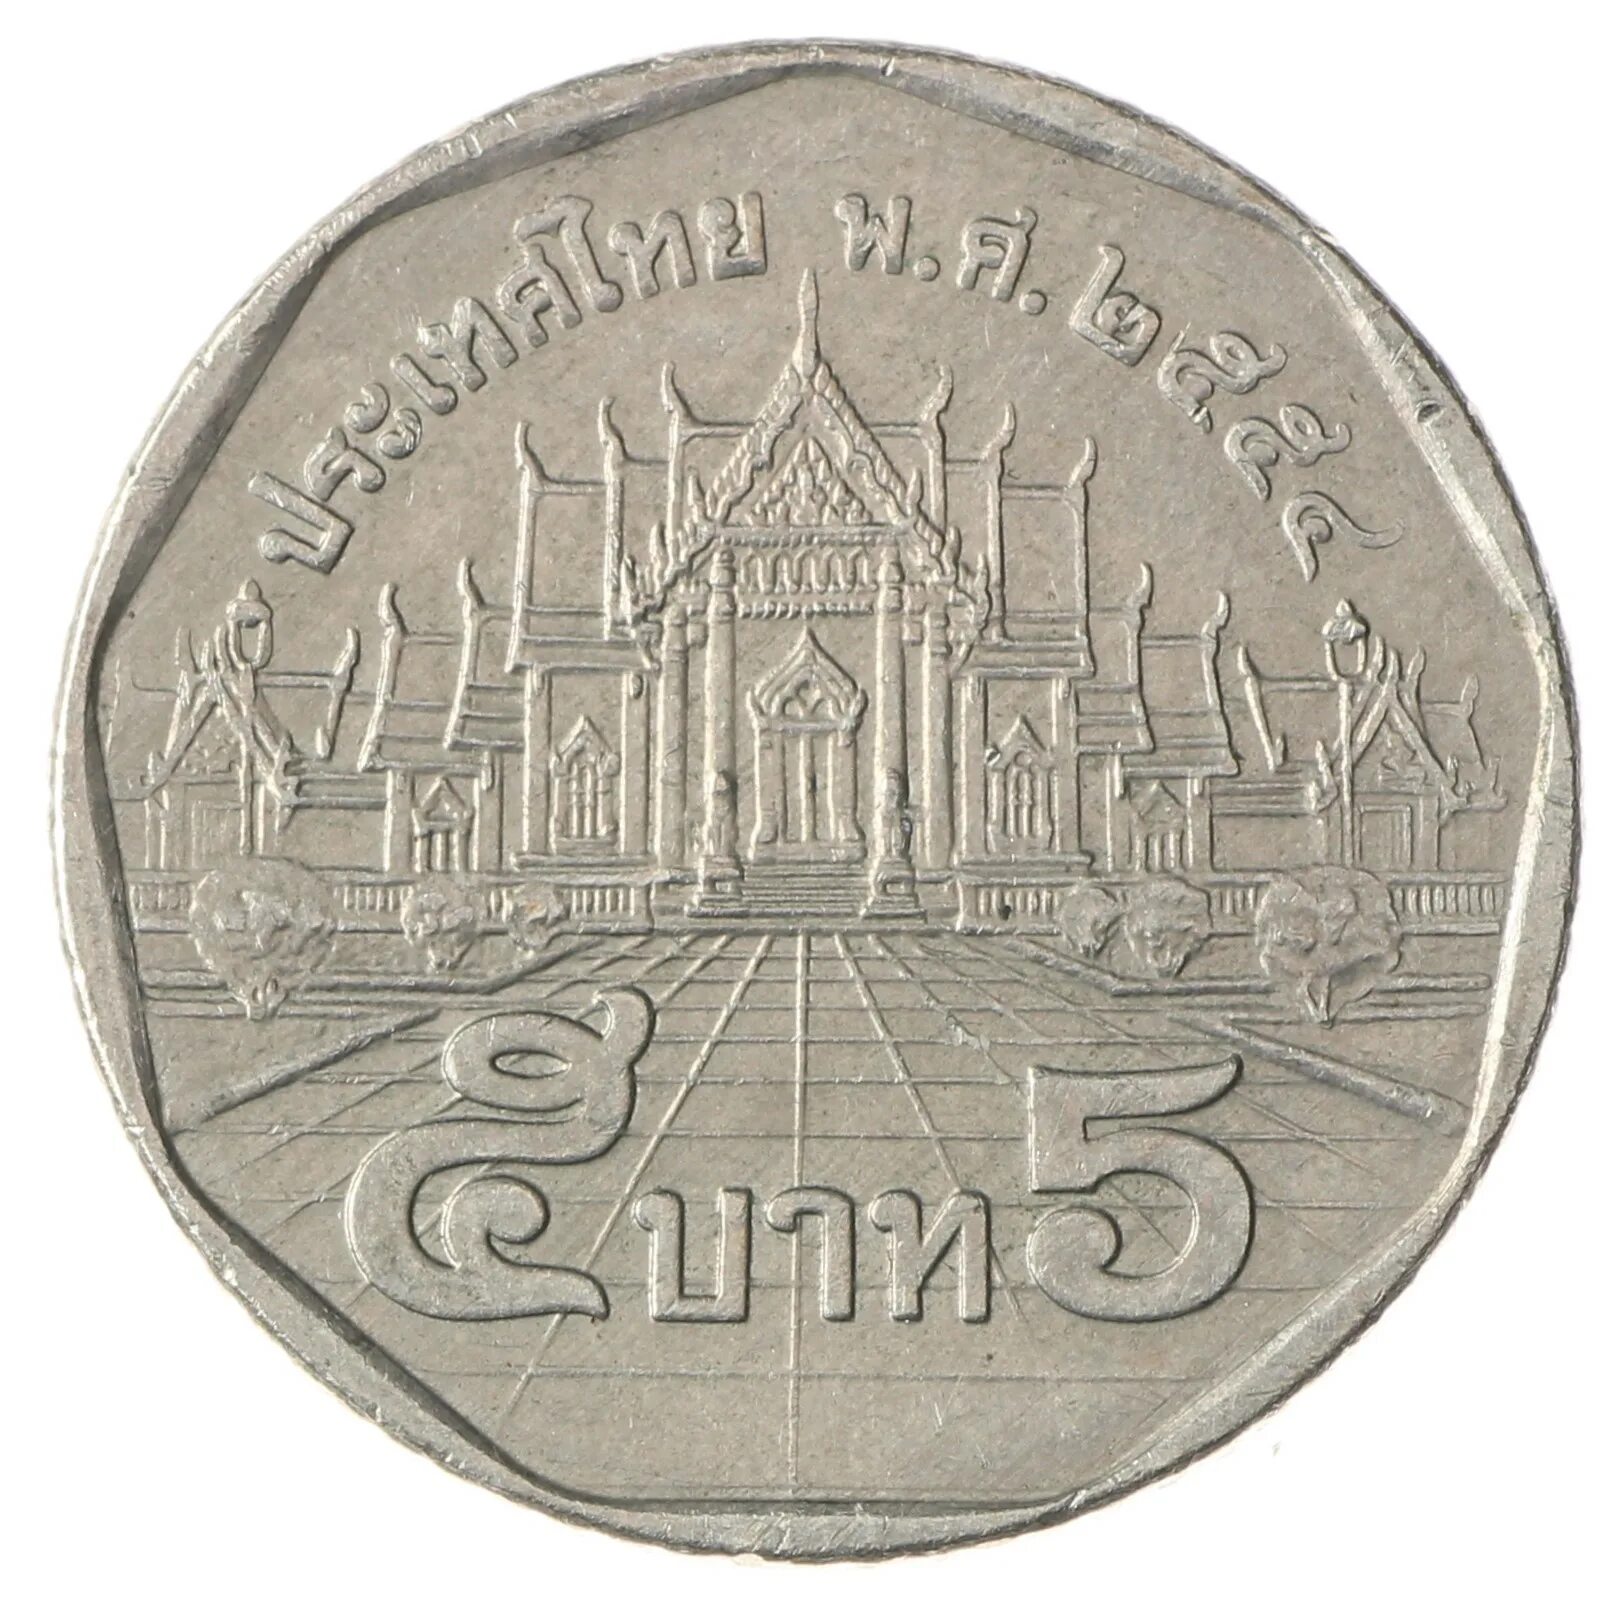 5 Бат монета. Монеты Тайланда 5 бат. Таиландская монета 5 бат. 5 Батов монета.